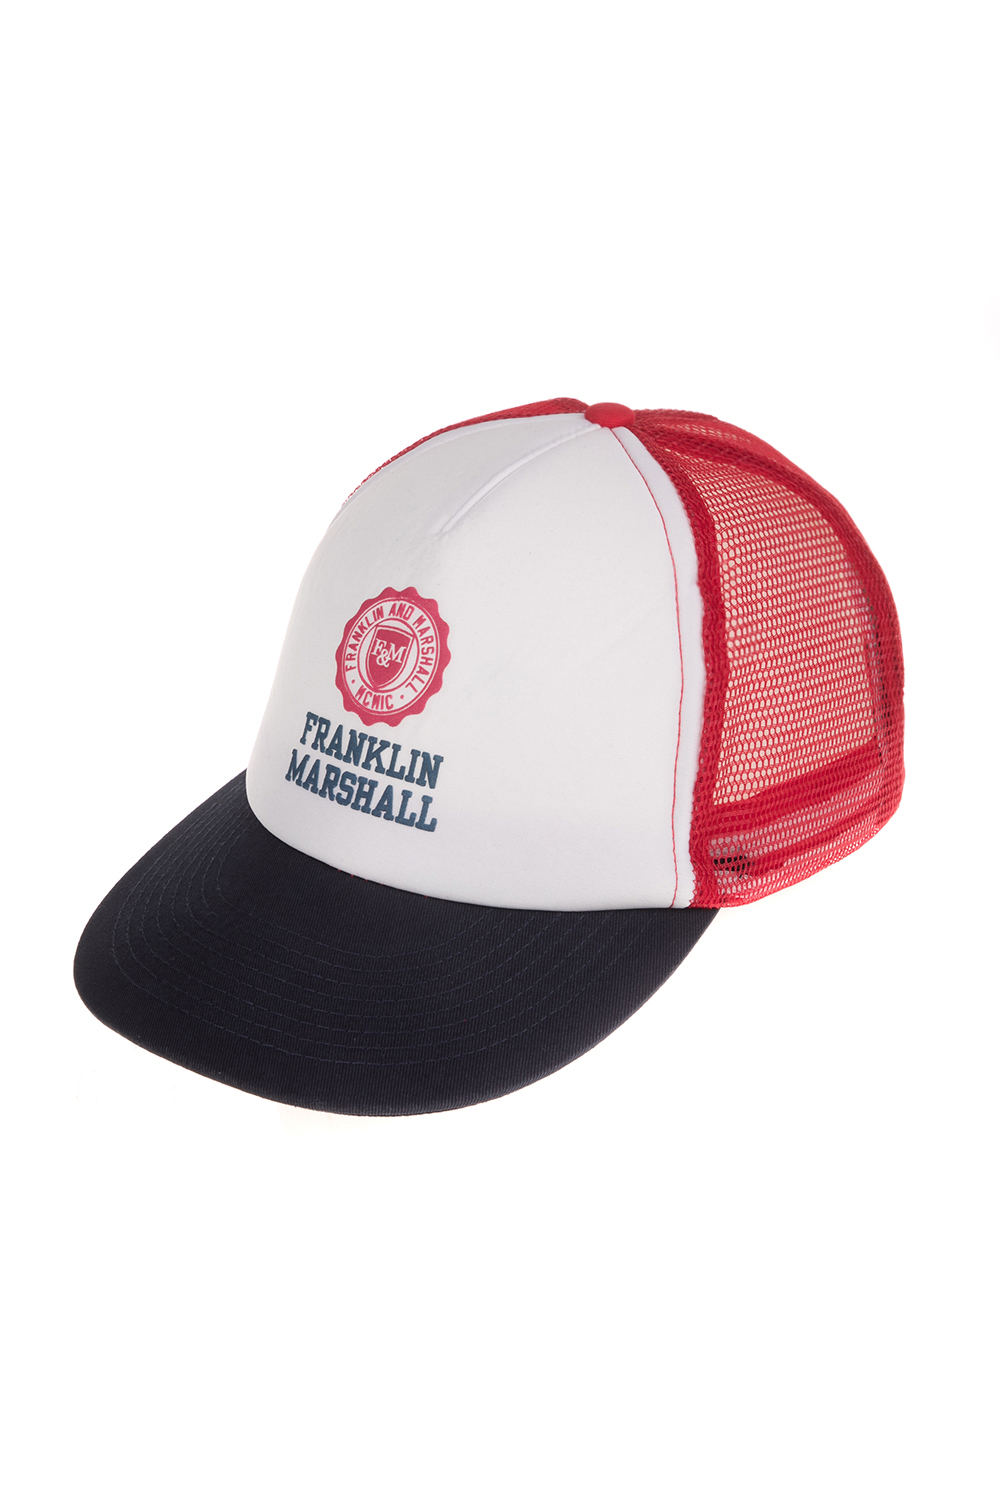 FRANKLIN & MARSHALL - Ανδρικό καπέλο FRANKLIN & MARSHALL μαύρο-λευκό Ανδρικά/Αξεσουάρ/Καπέλα/Casual